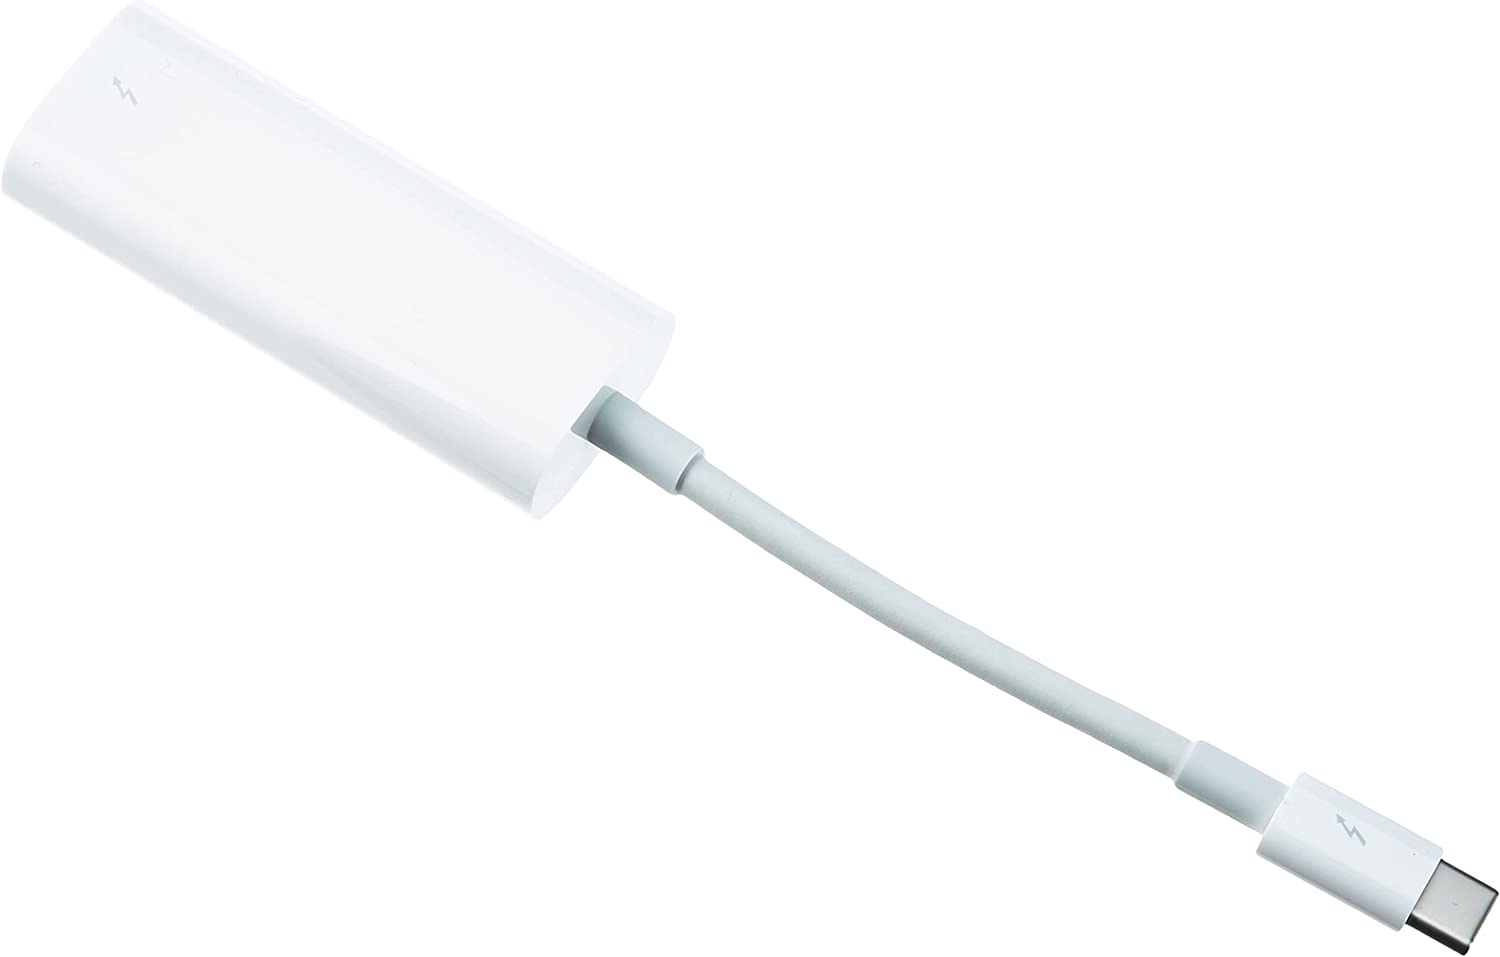 Used Apple Thunderbolt 3 (USB-C) to Thunderbolt 2 Adapter, White,Model A1790